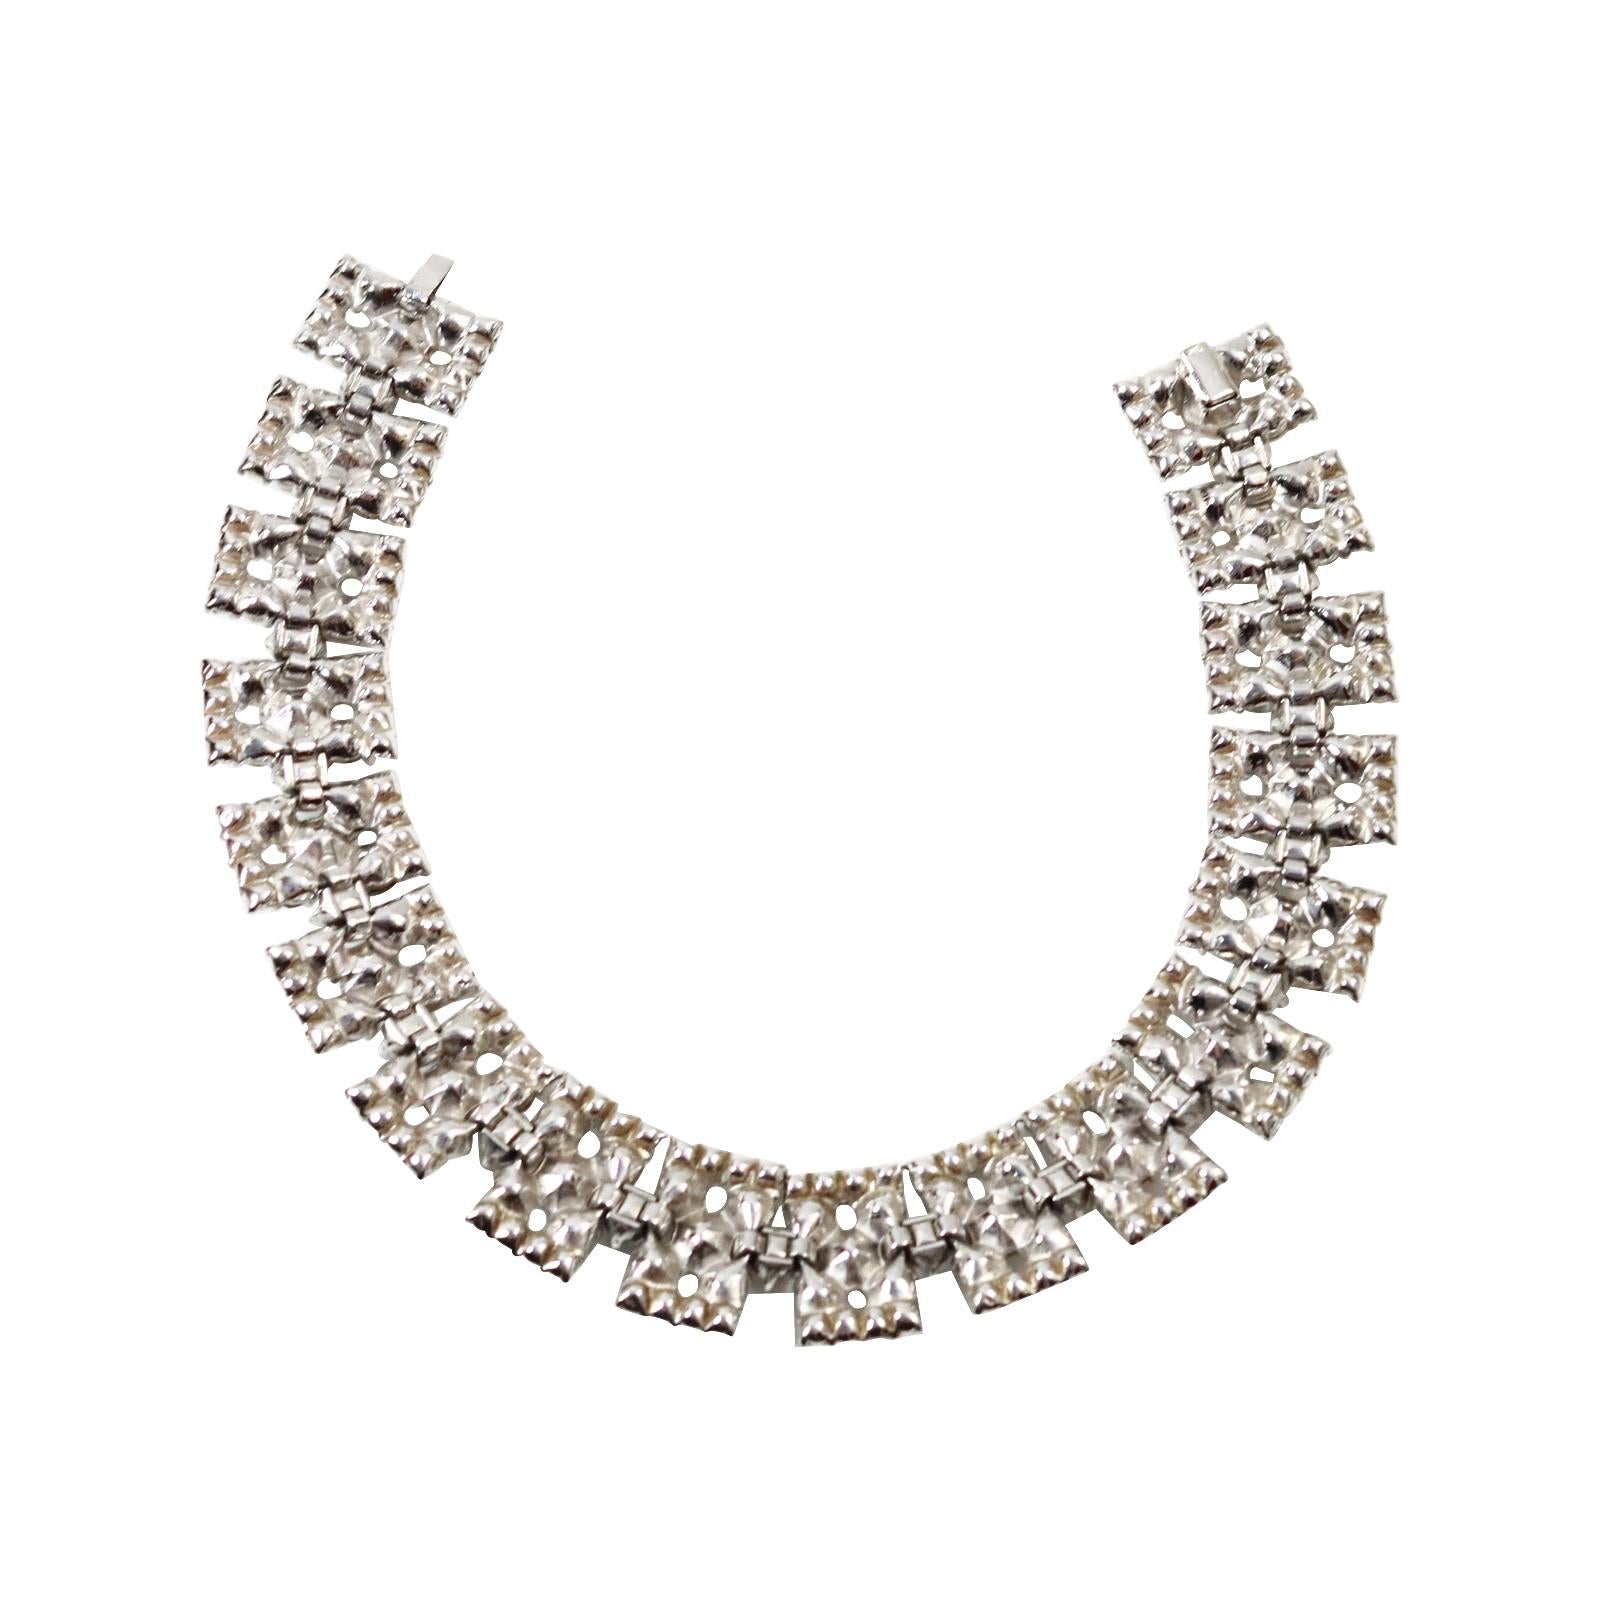 Artist Vintage Bogoff Diamante Choker Necklace Circa 1960s For Sale